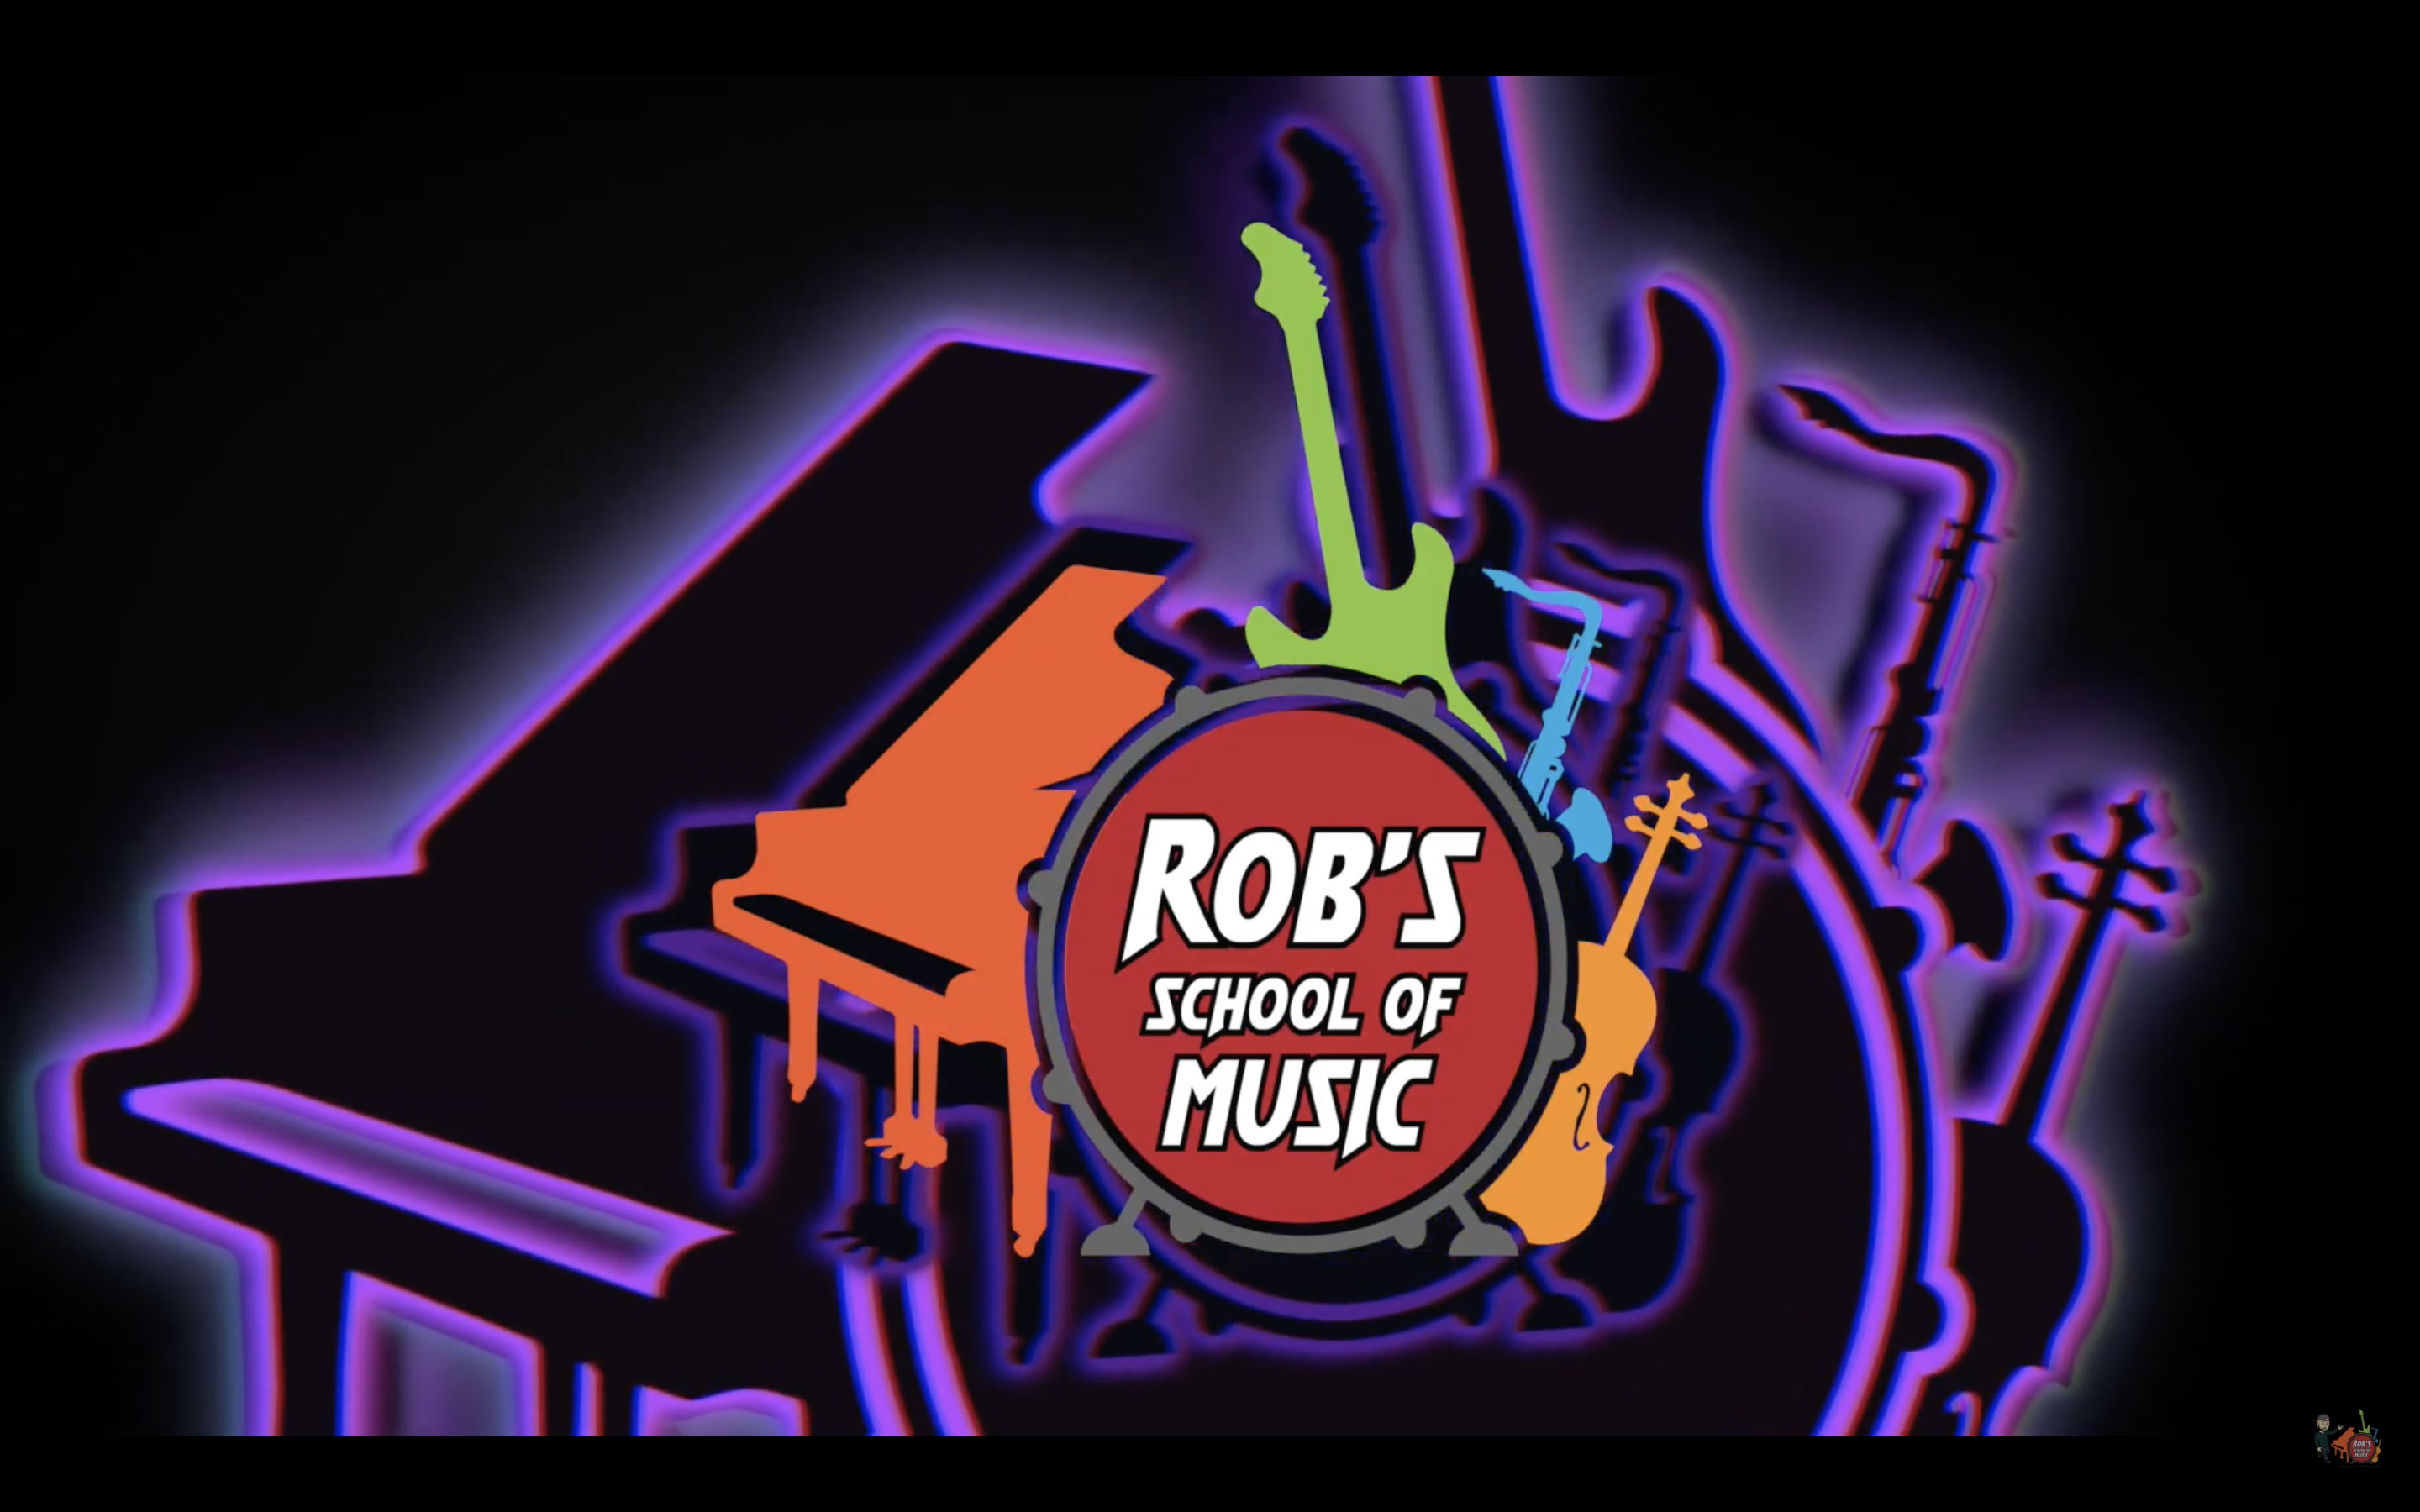 Rob’s School of Music